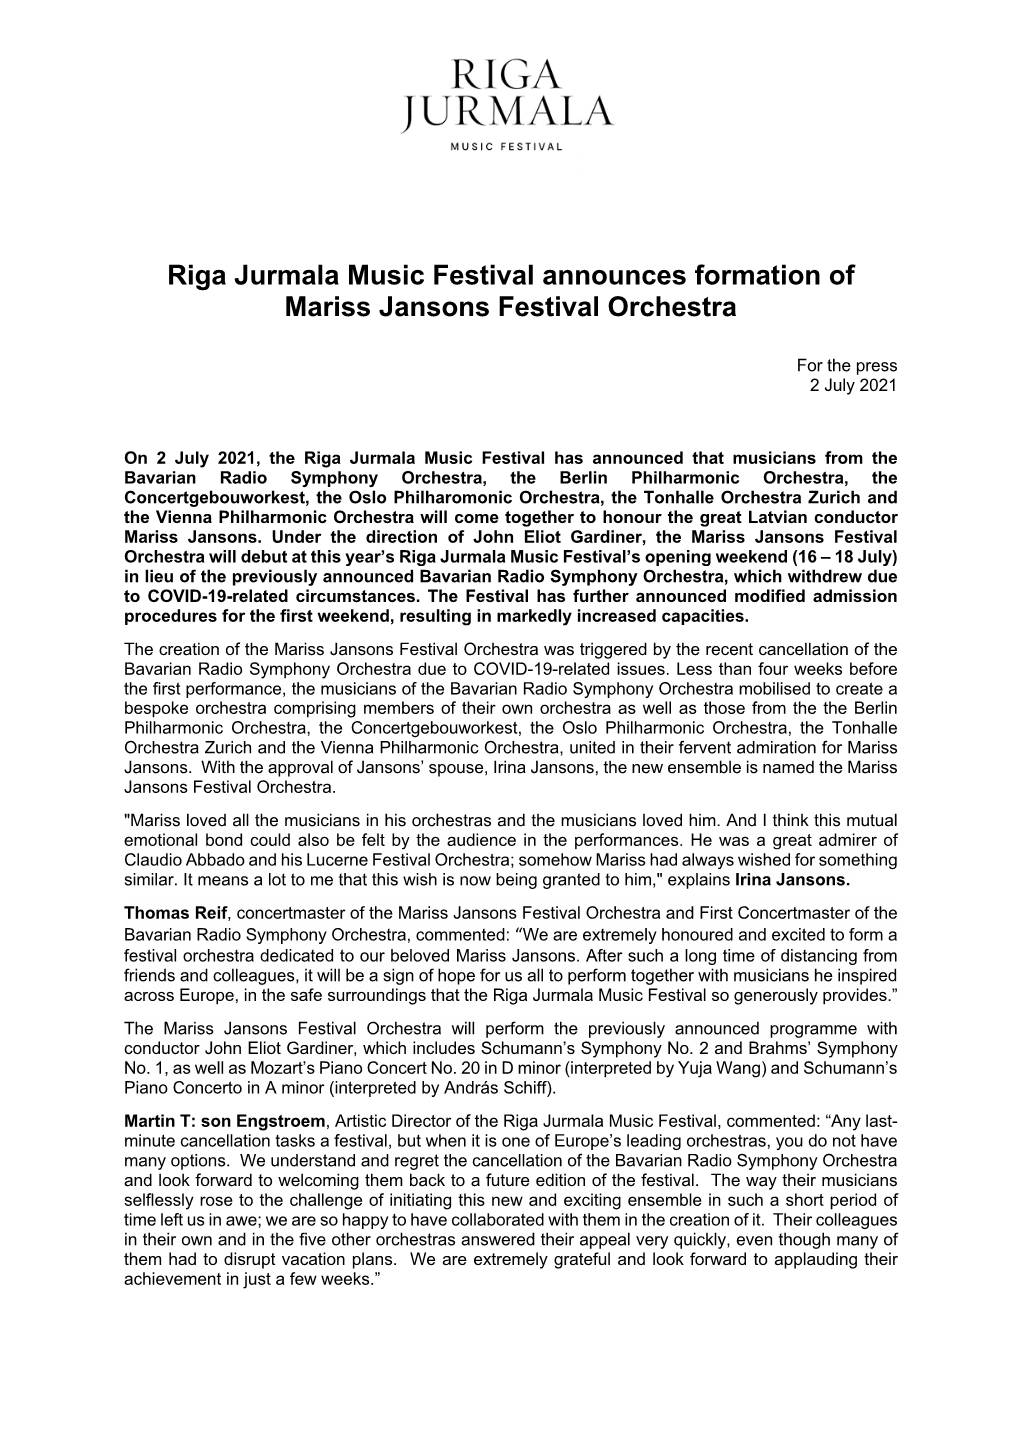 Riga Jurmala Music Festival Announces Formation of Mariss Jansons Festival Orchestra